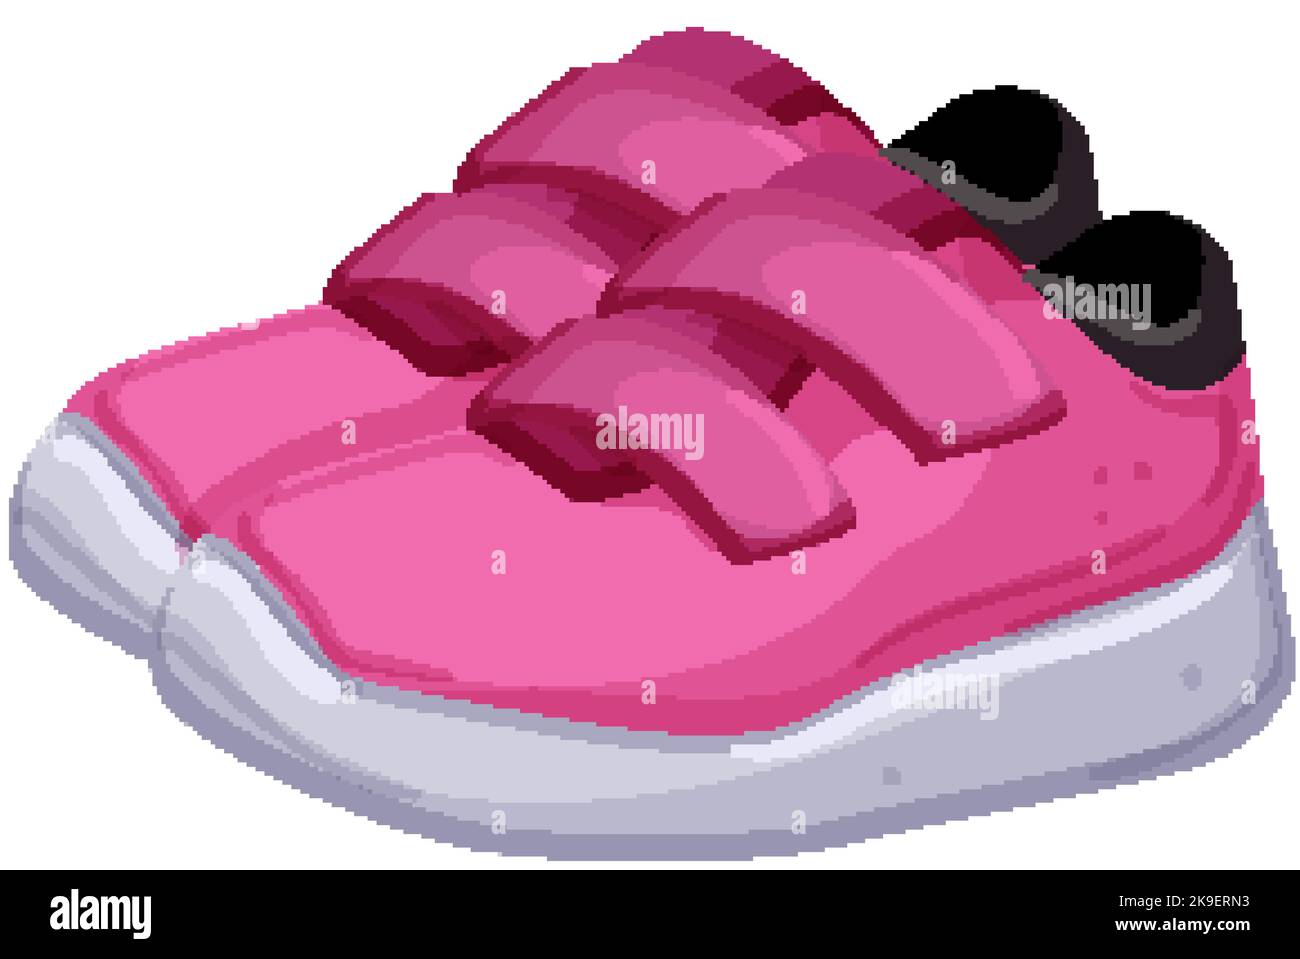 sport kid shoes cartoon vector illustration Stock Vector